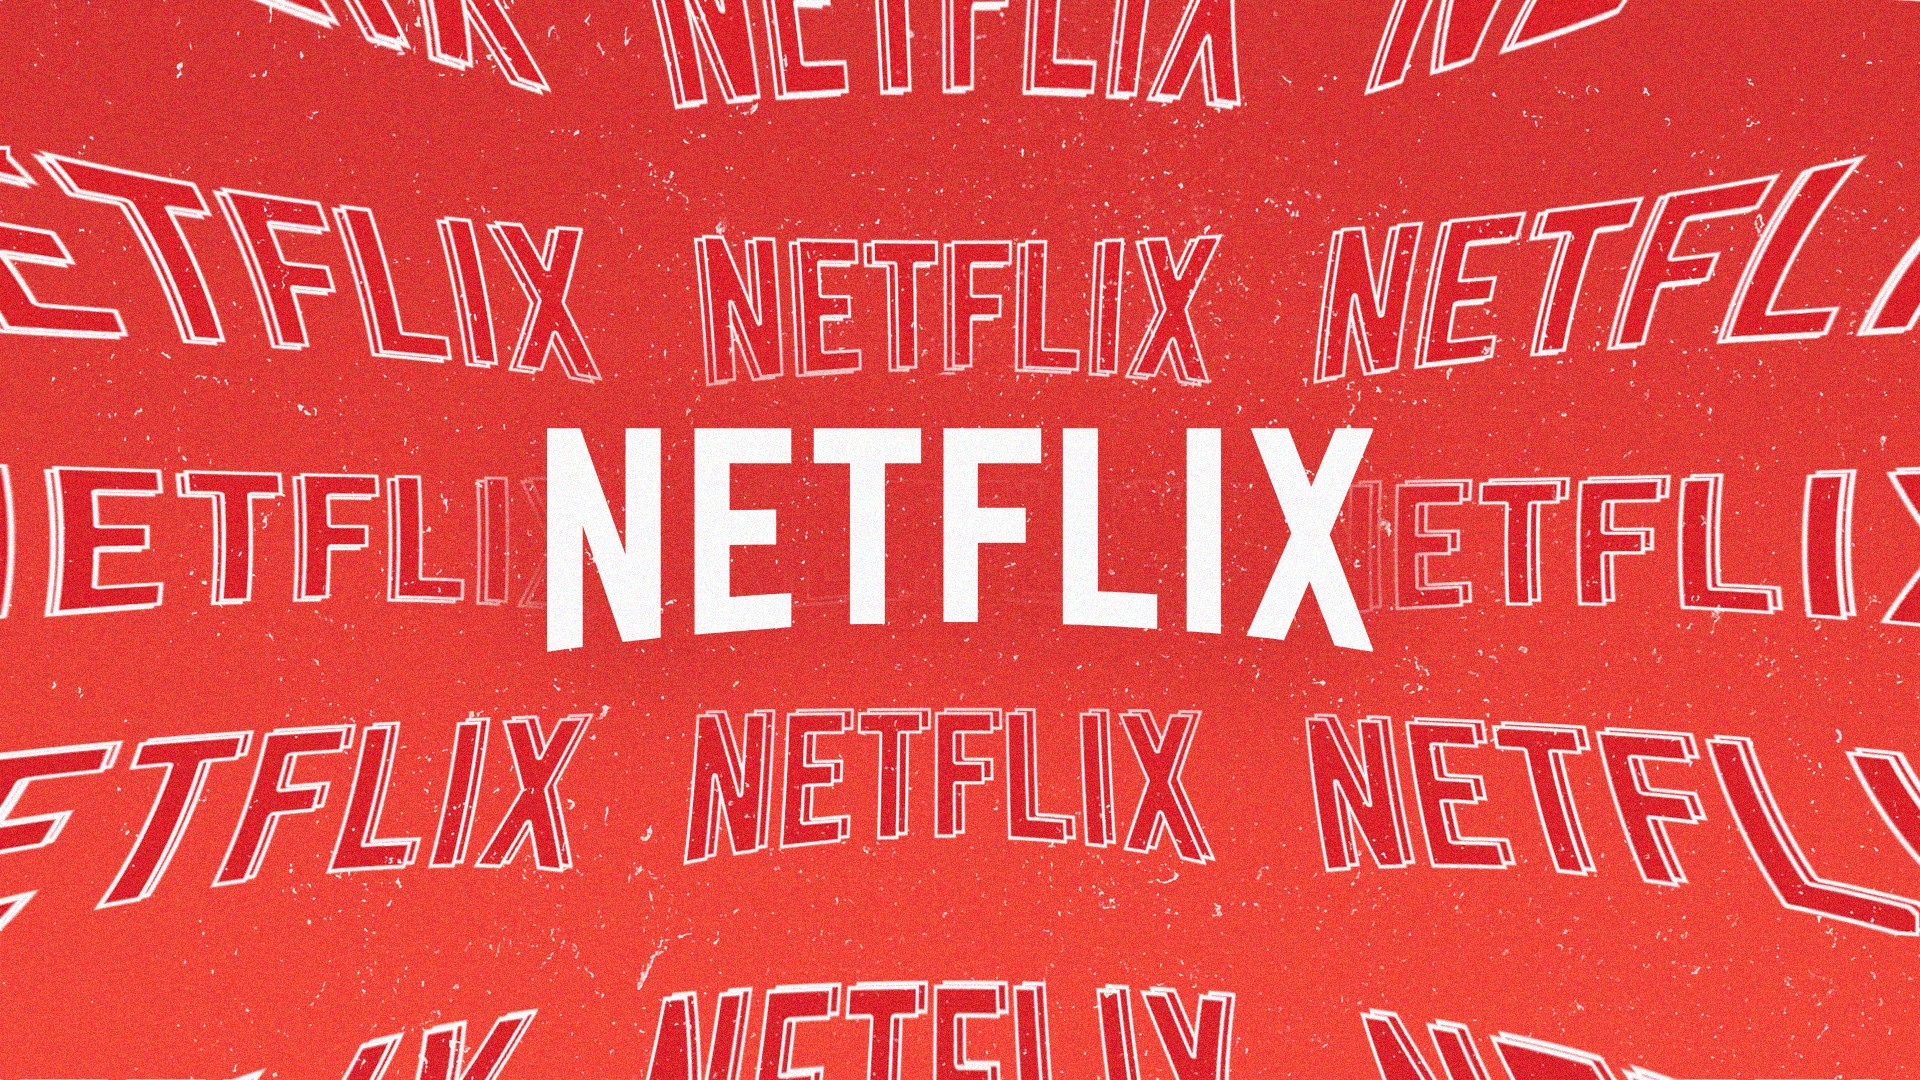 Netflix vai encerrar compartilhamento de senhas a partir de 2023